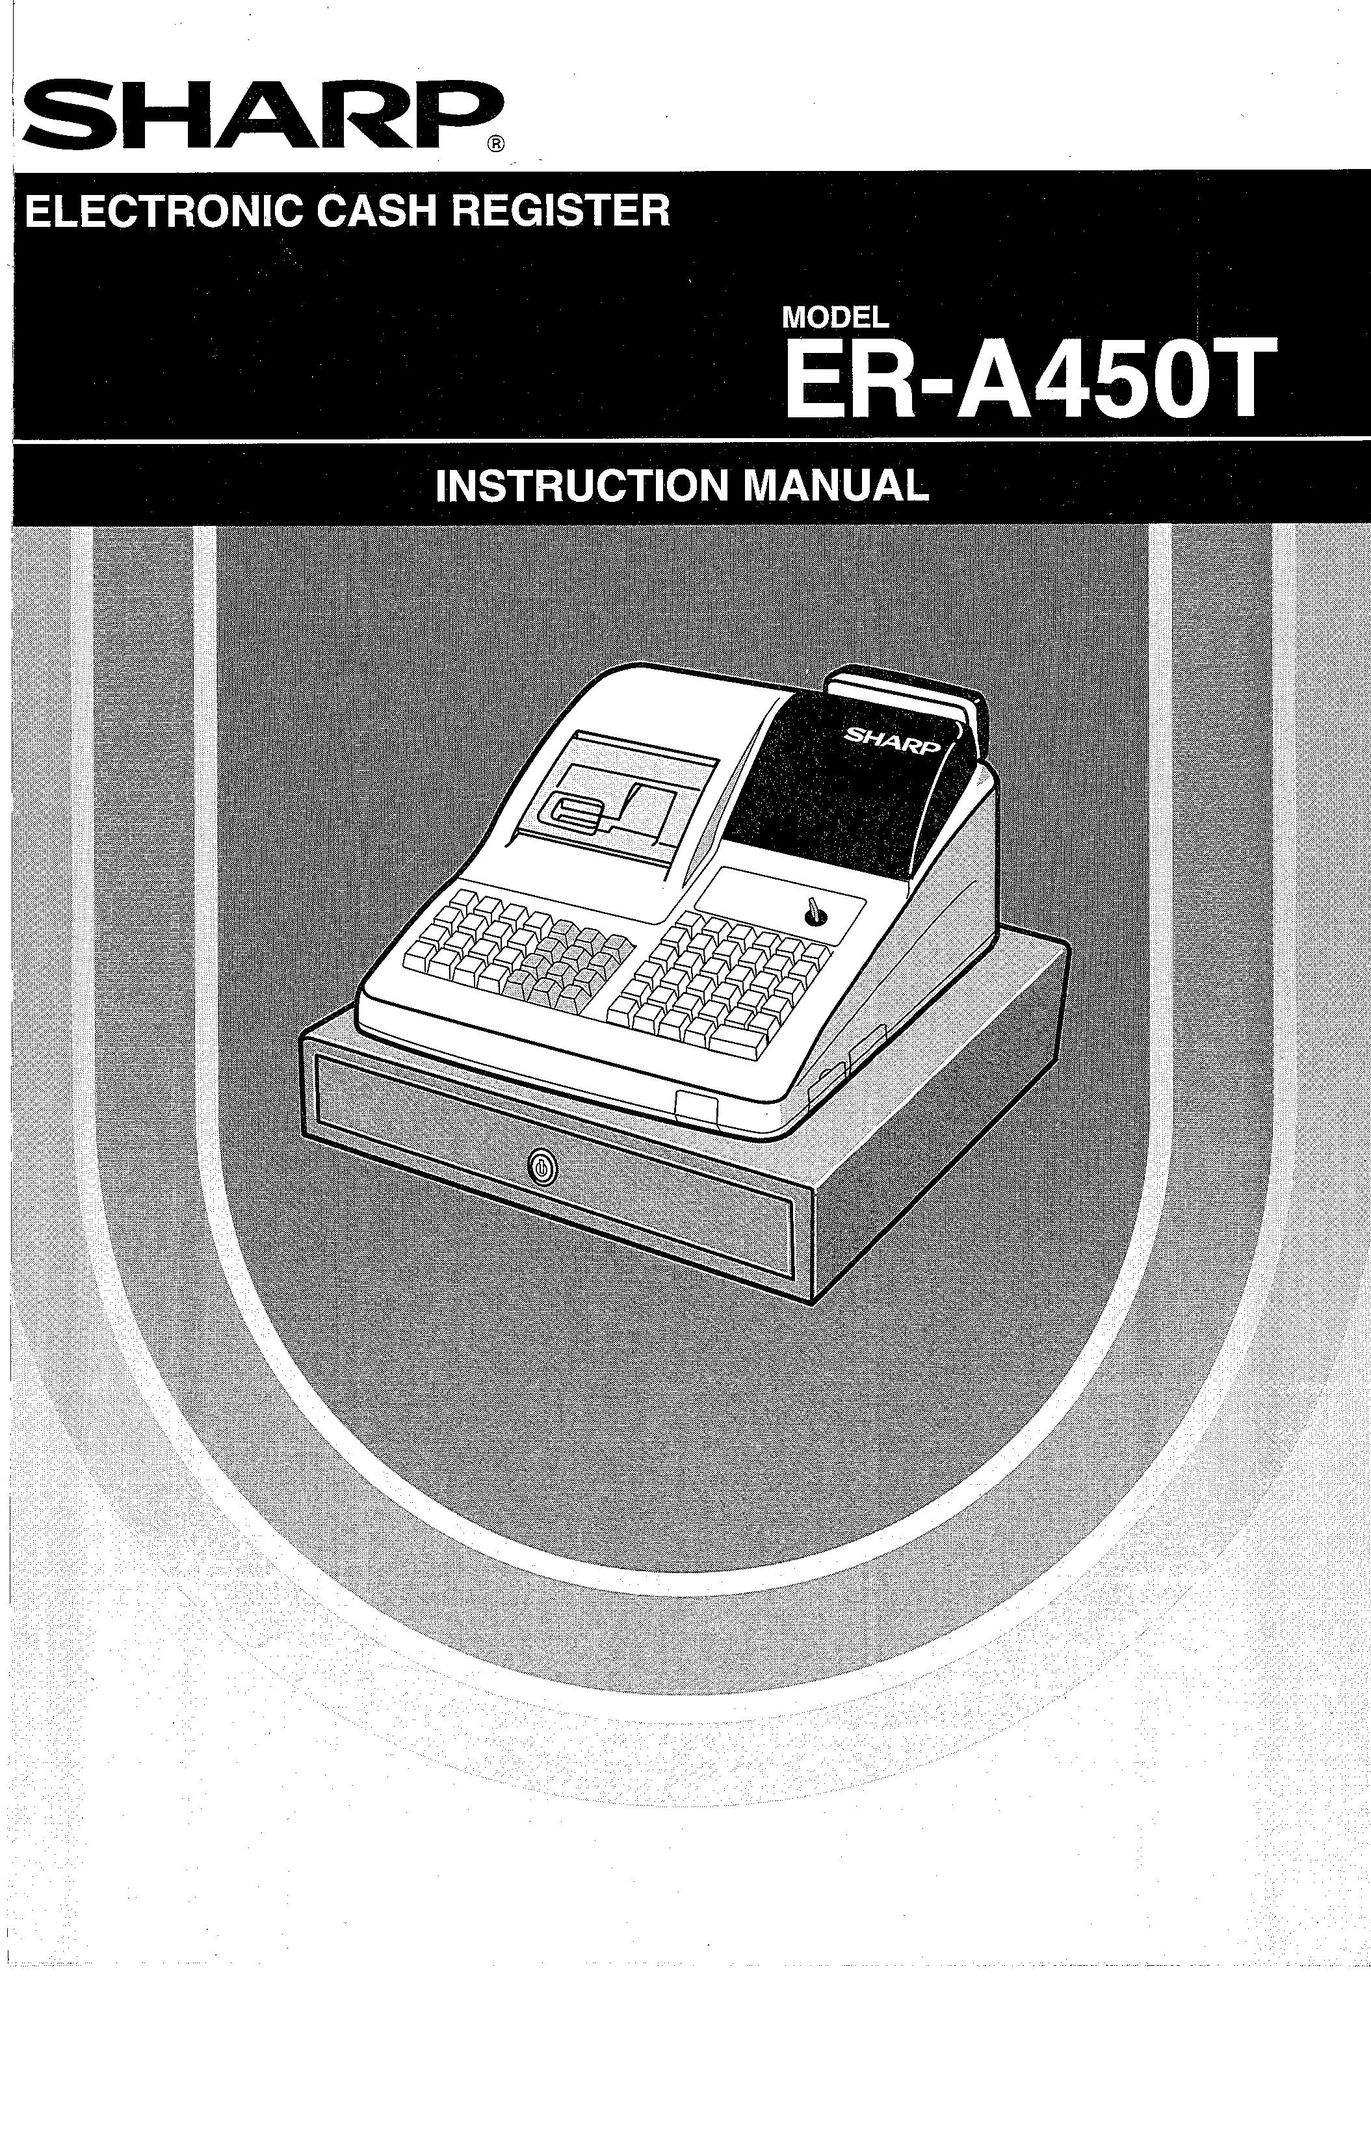 Sharp ER-A450T Cash Register User Manual